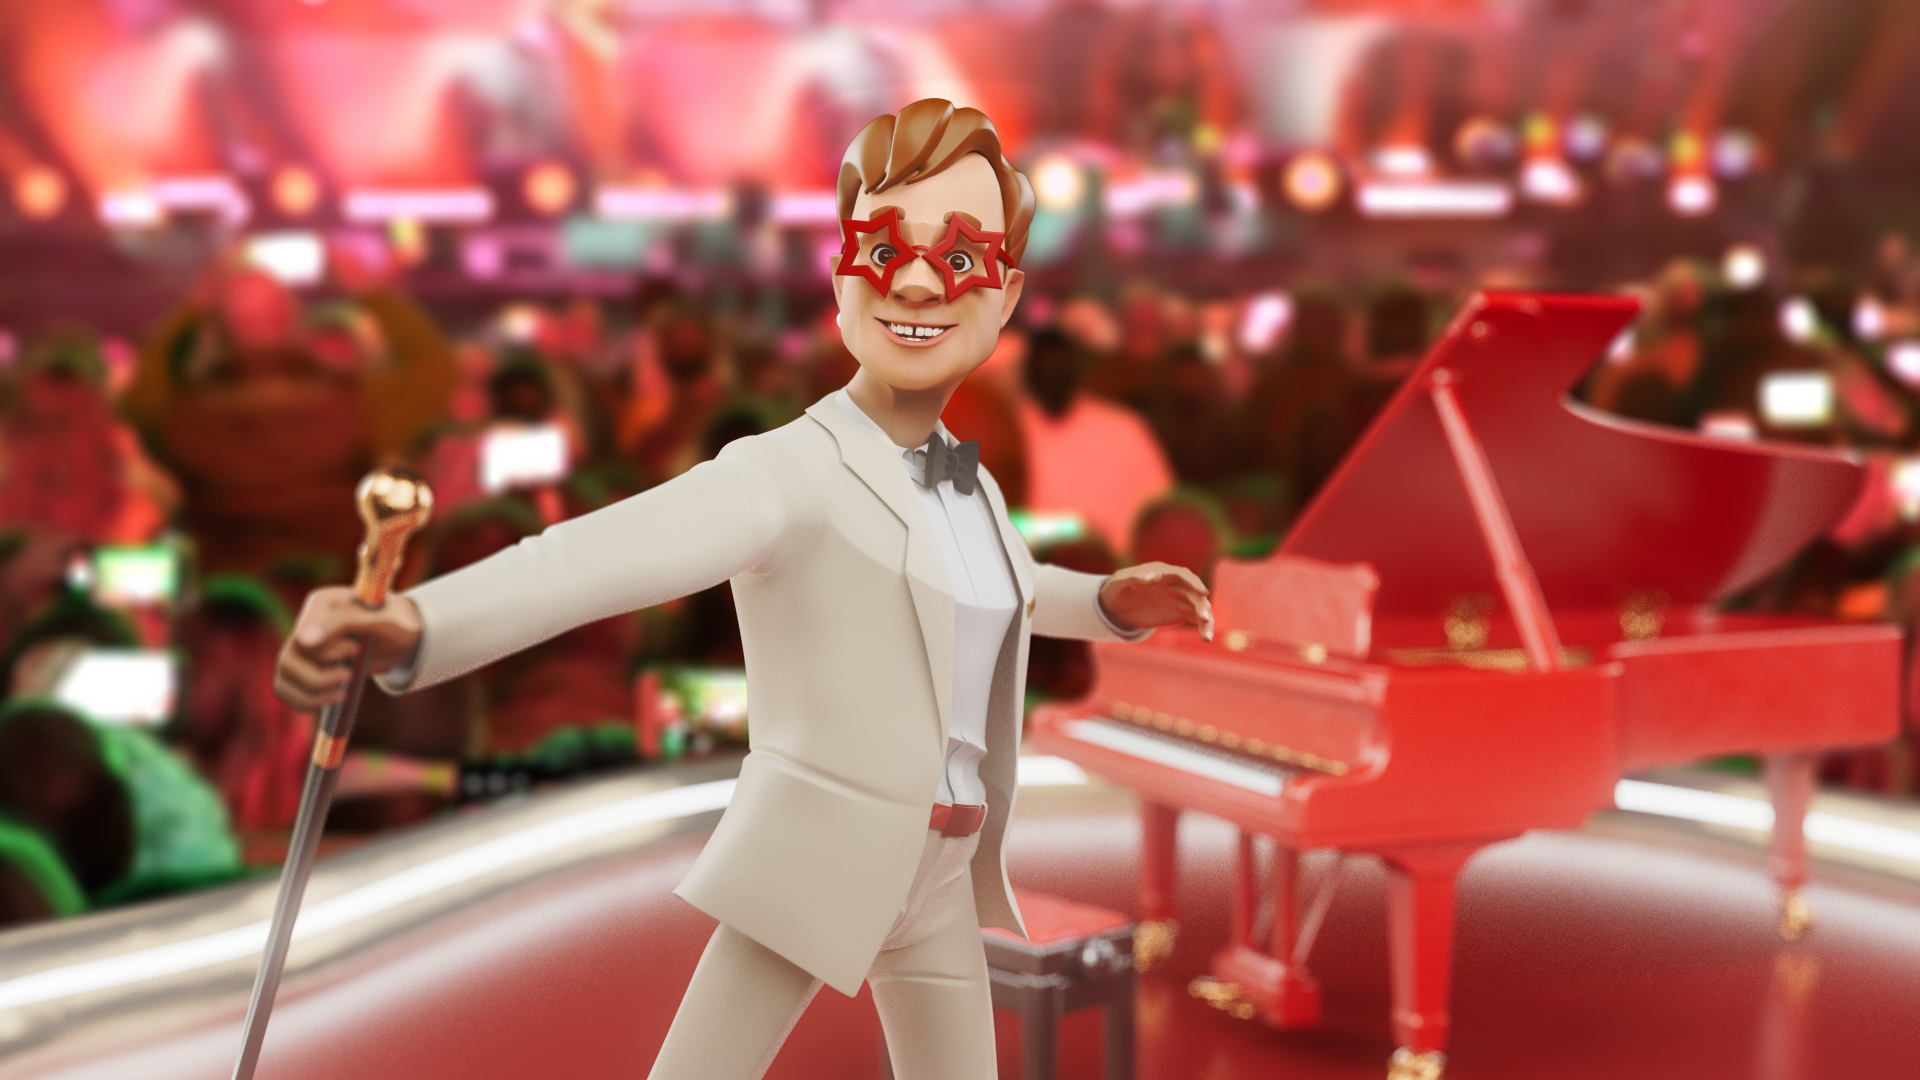 image of the augmented reality miniature version of Elton John from the ‘Elton John X Vodafone’ app